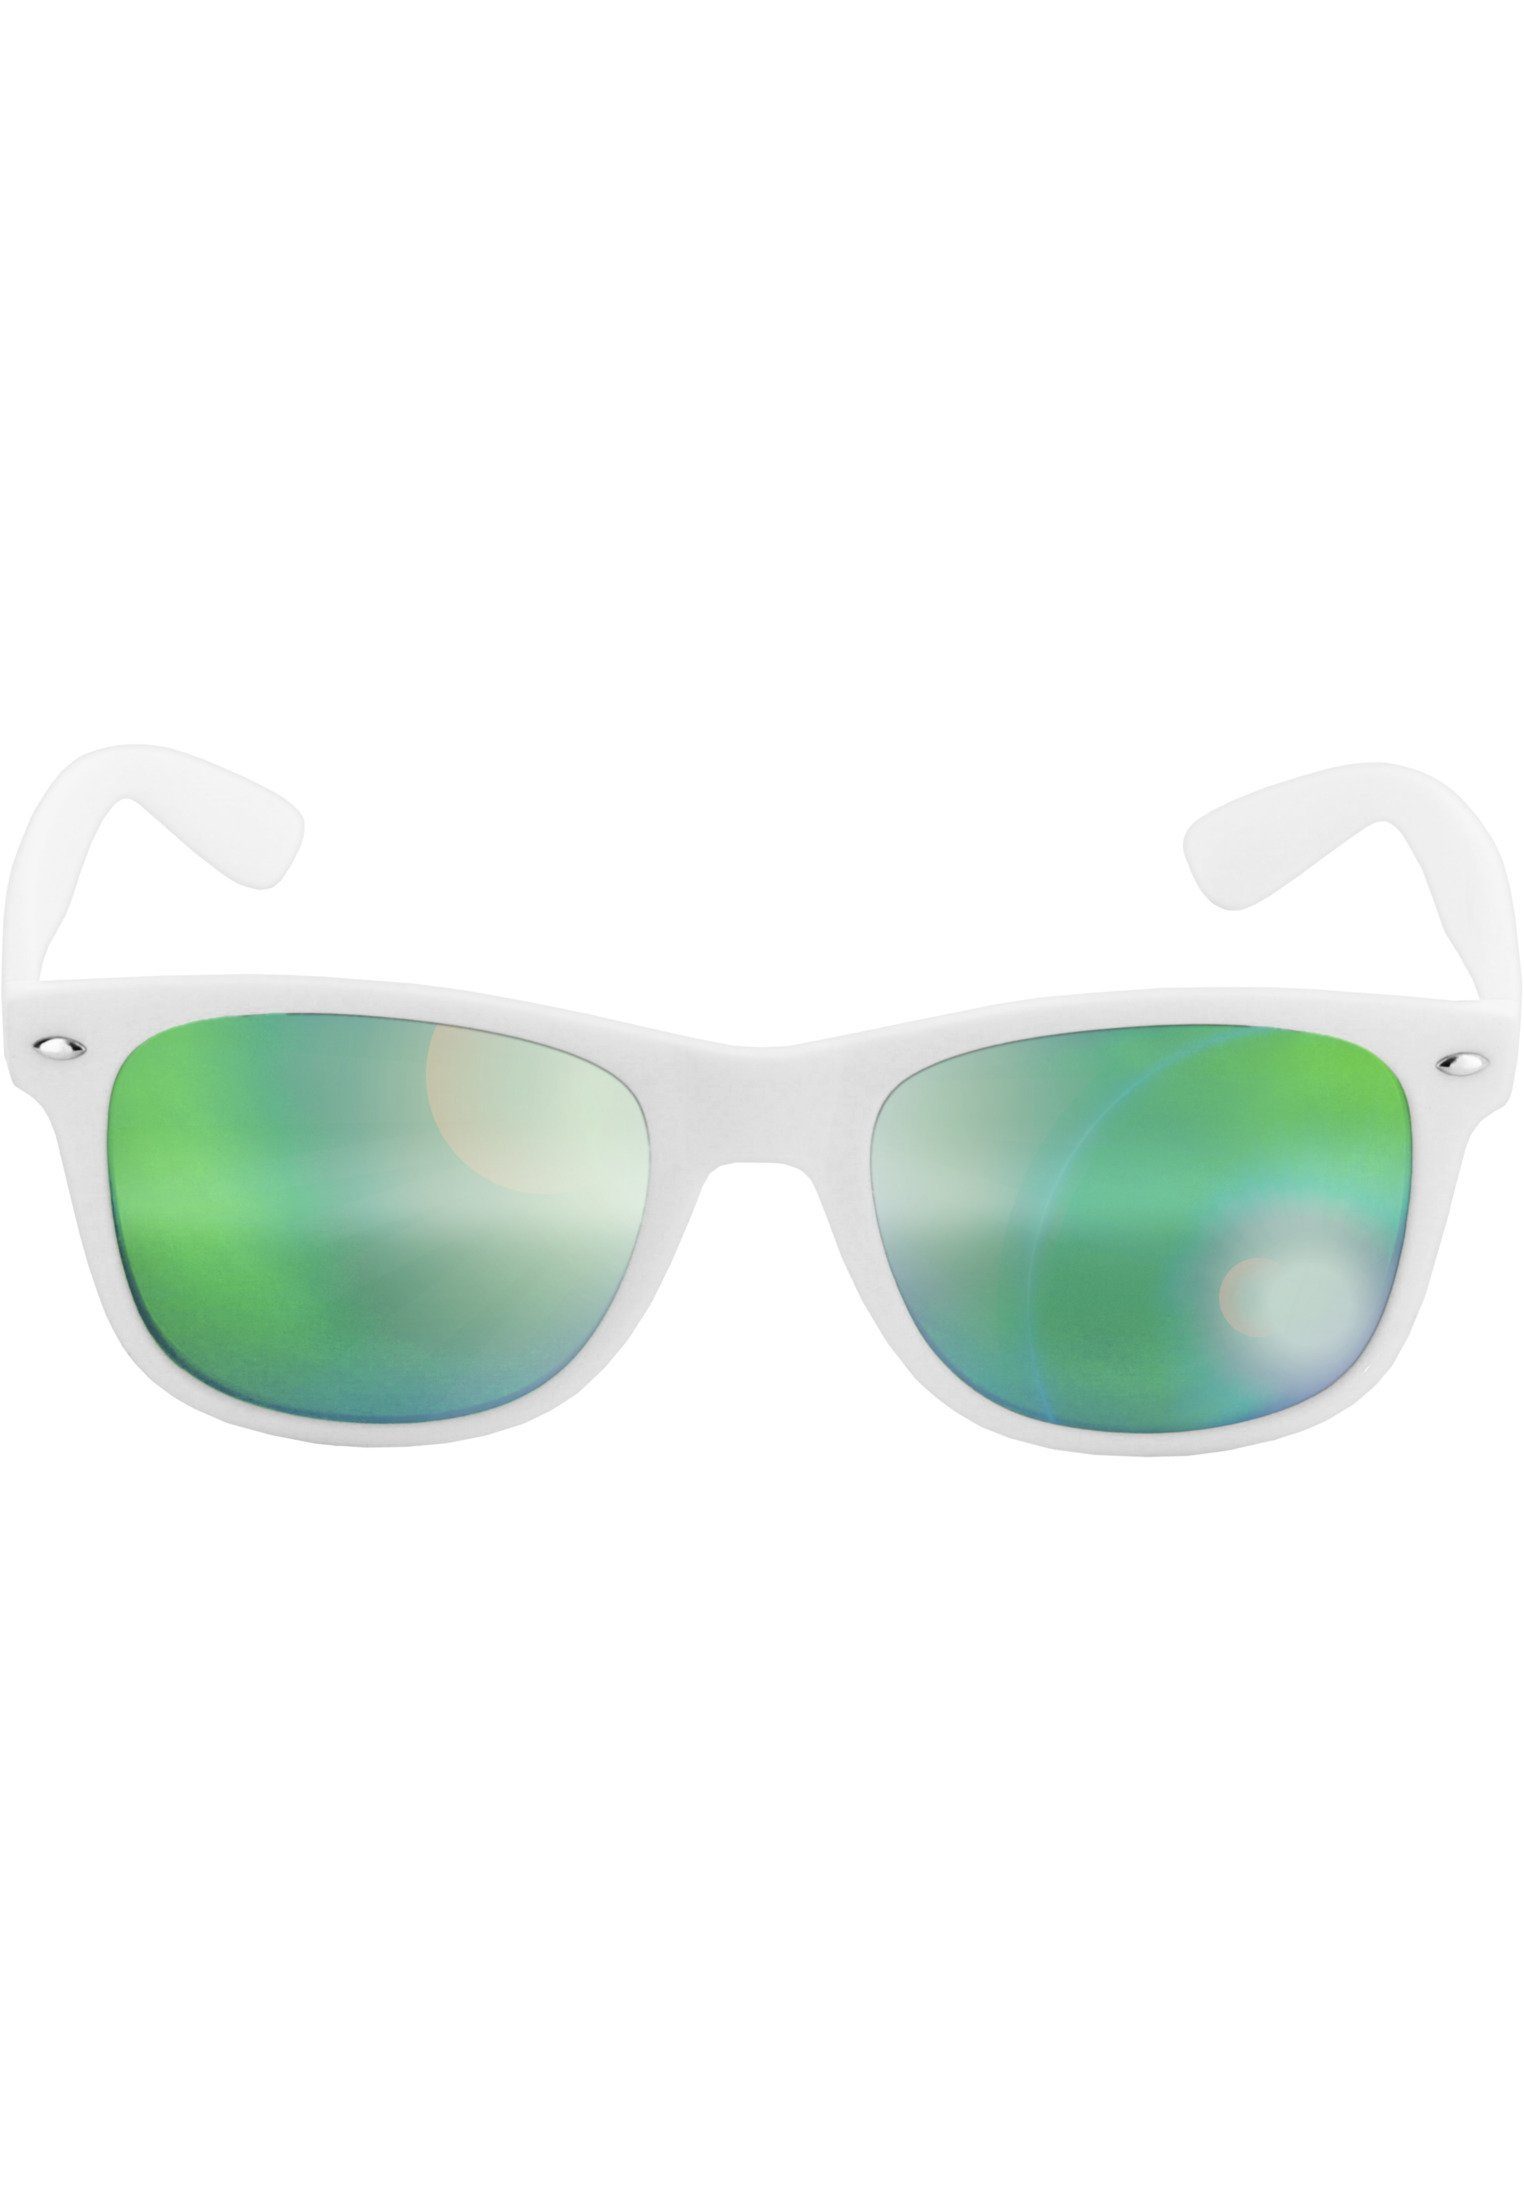 MSTRDS Sonnenbrille Accessoires Sunglasses Likoma Mirror wht/grn